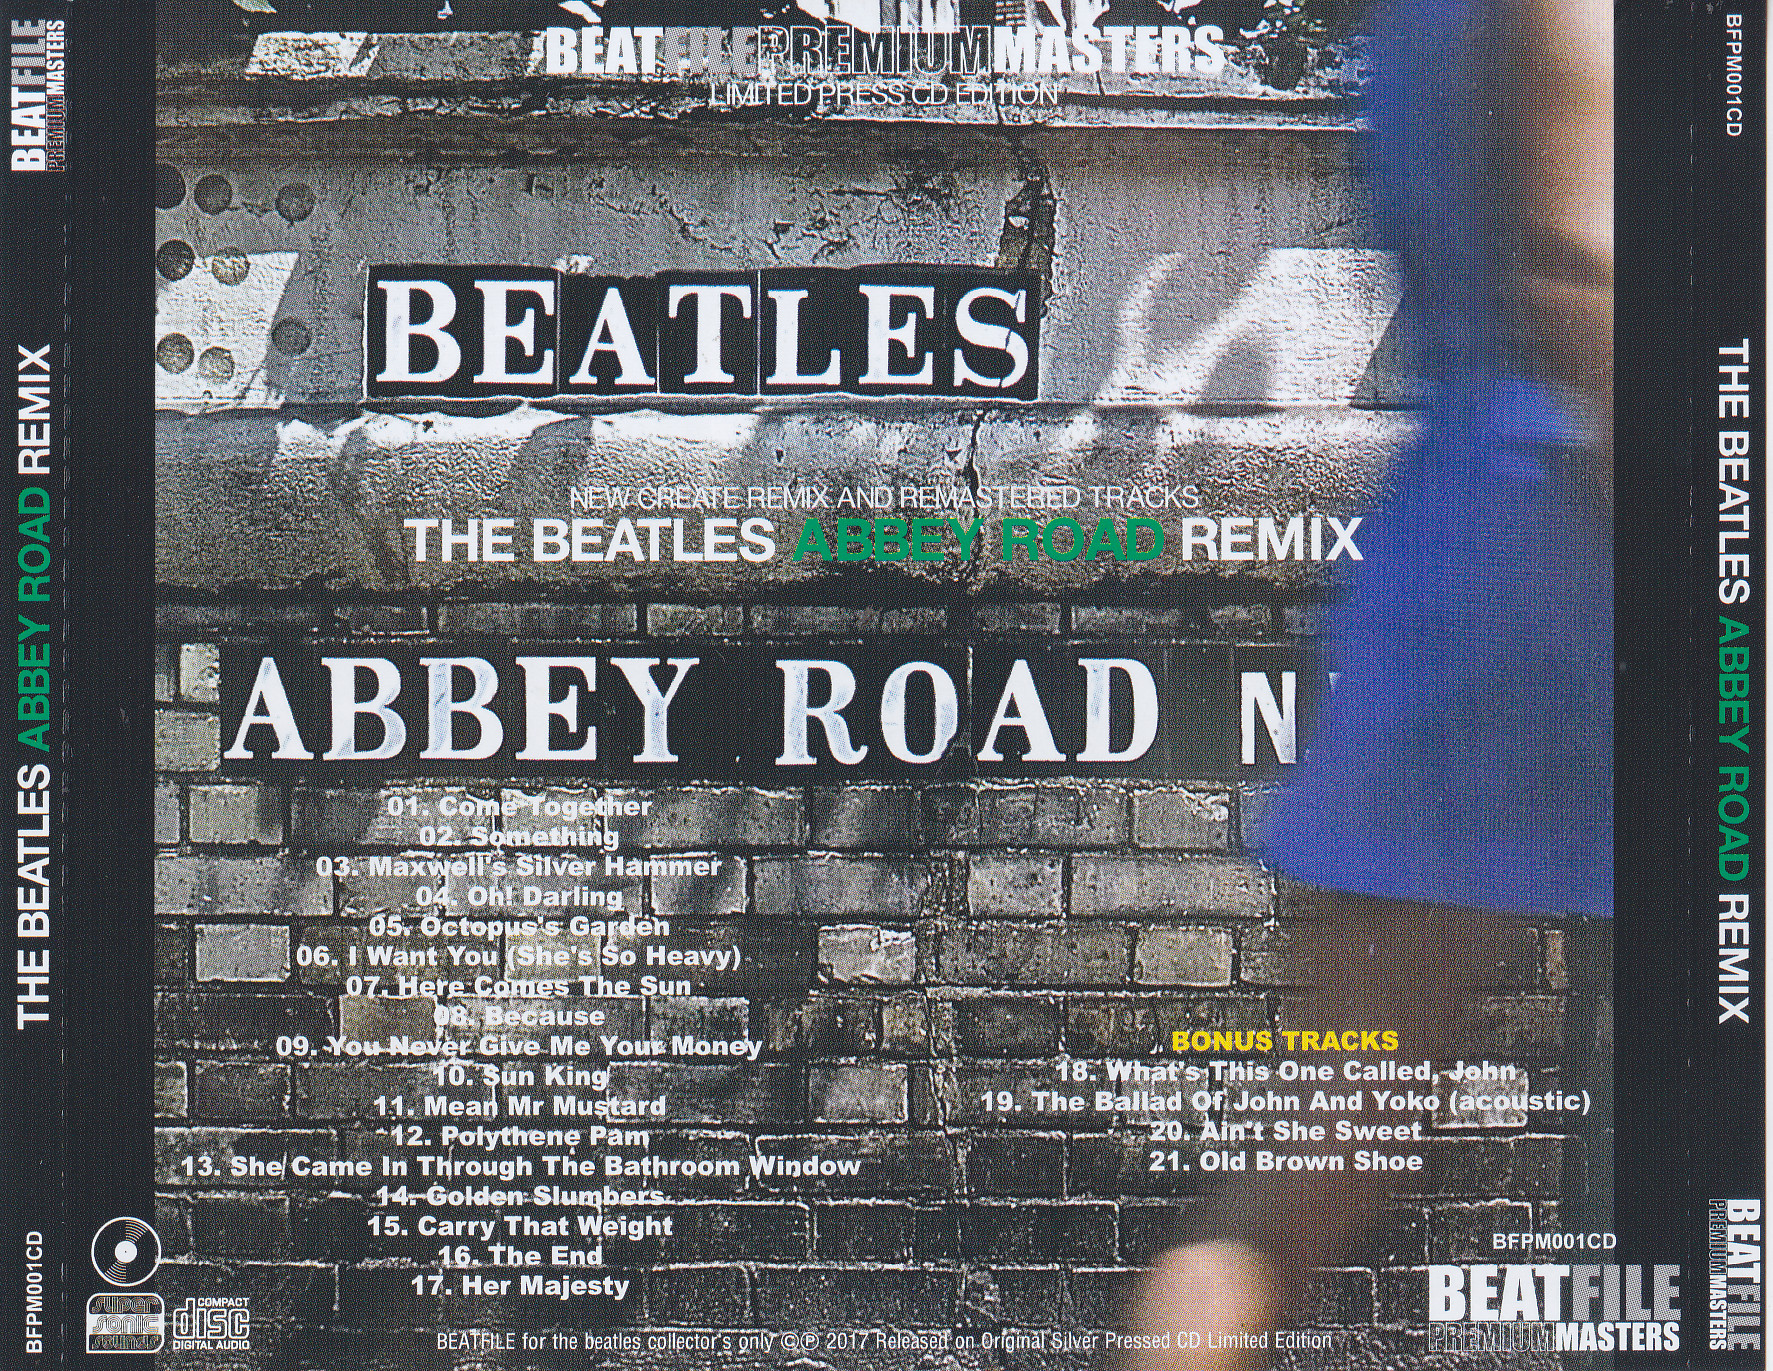 Cd roads. The Beatles "Abbey Road, CD". Диск Abbey Road Beatles. The Beatles Abbey Road 2019. Обложка диска Beatles Abbey Road.